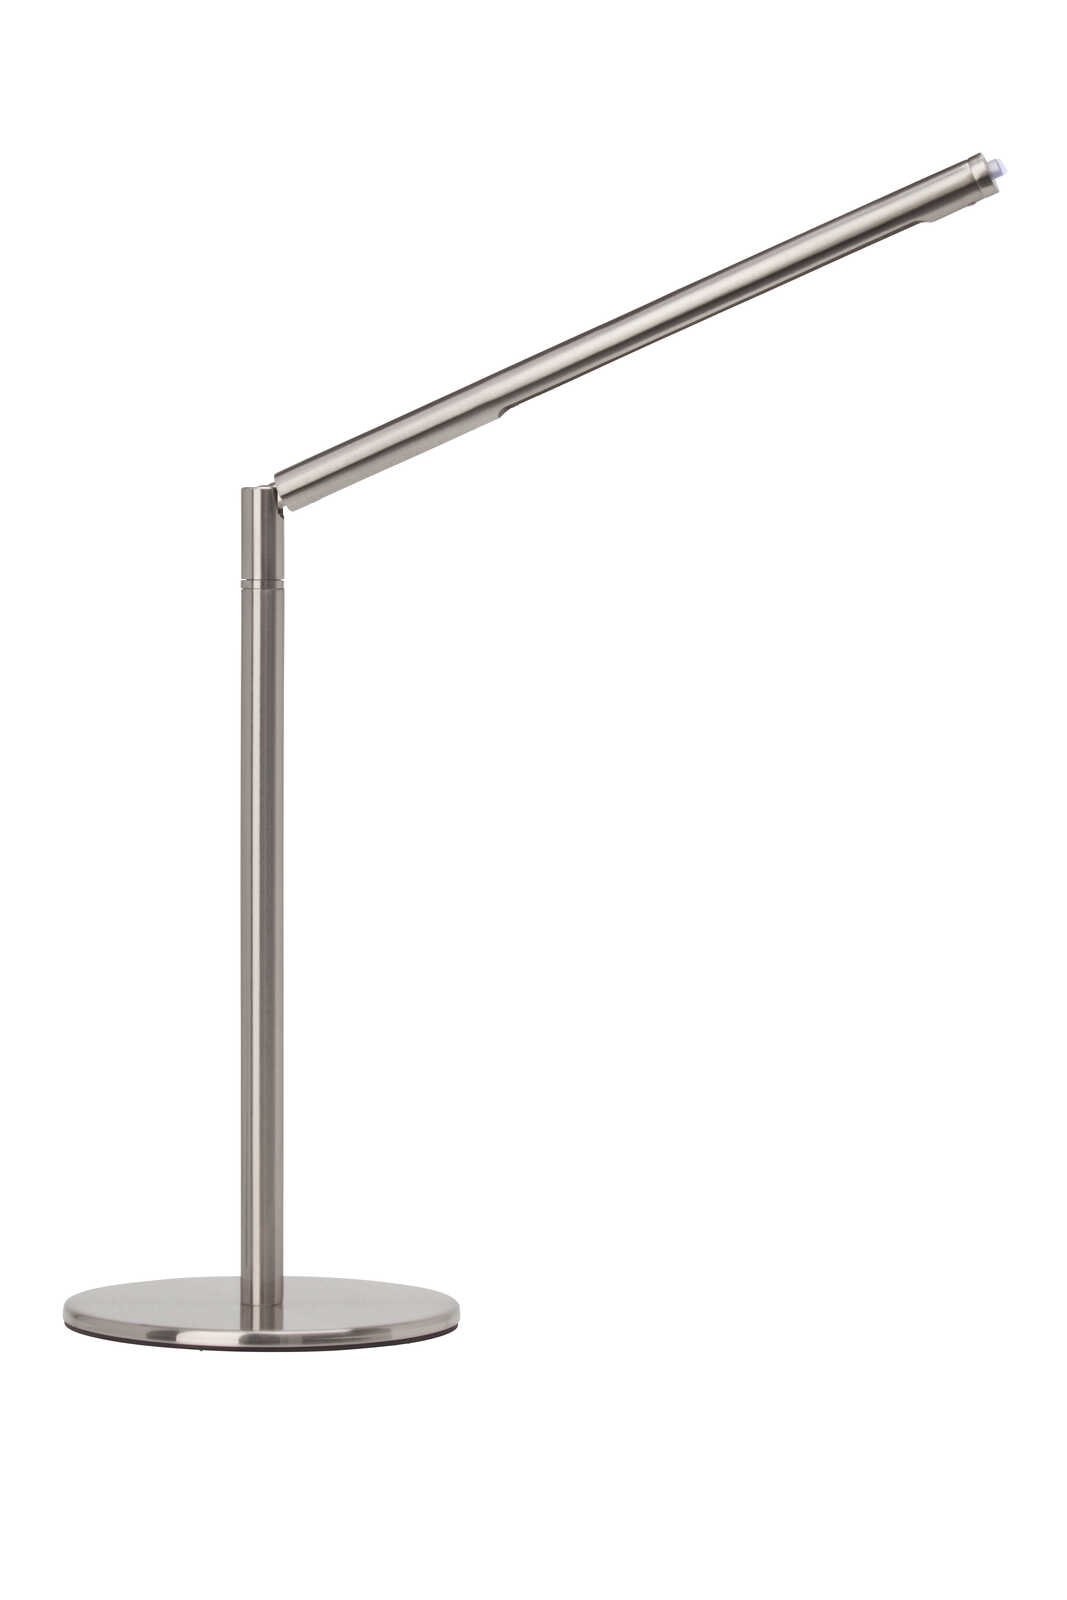             Lampe de table en métal - Carlotta - Métallisé
        